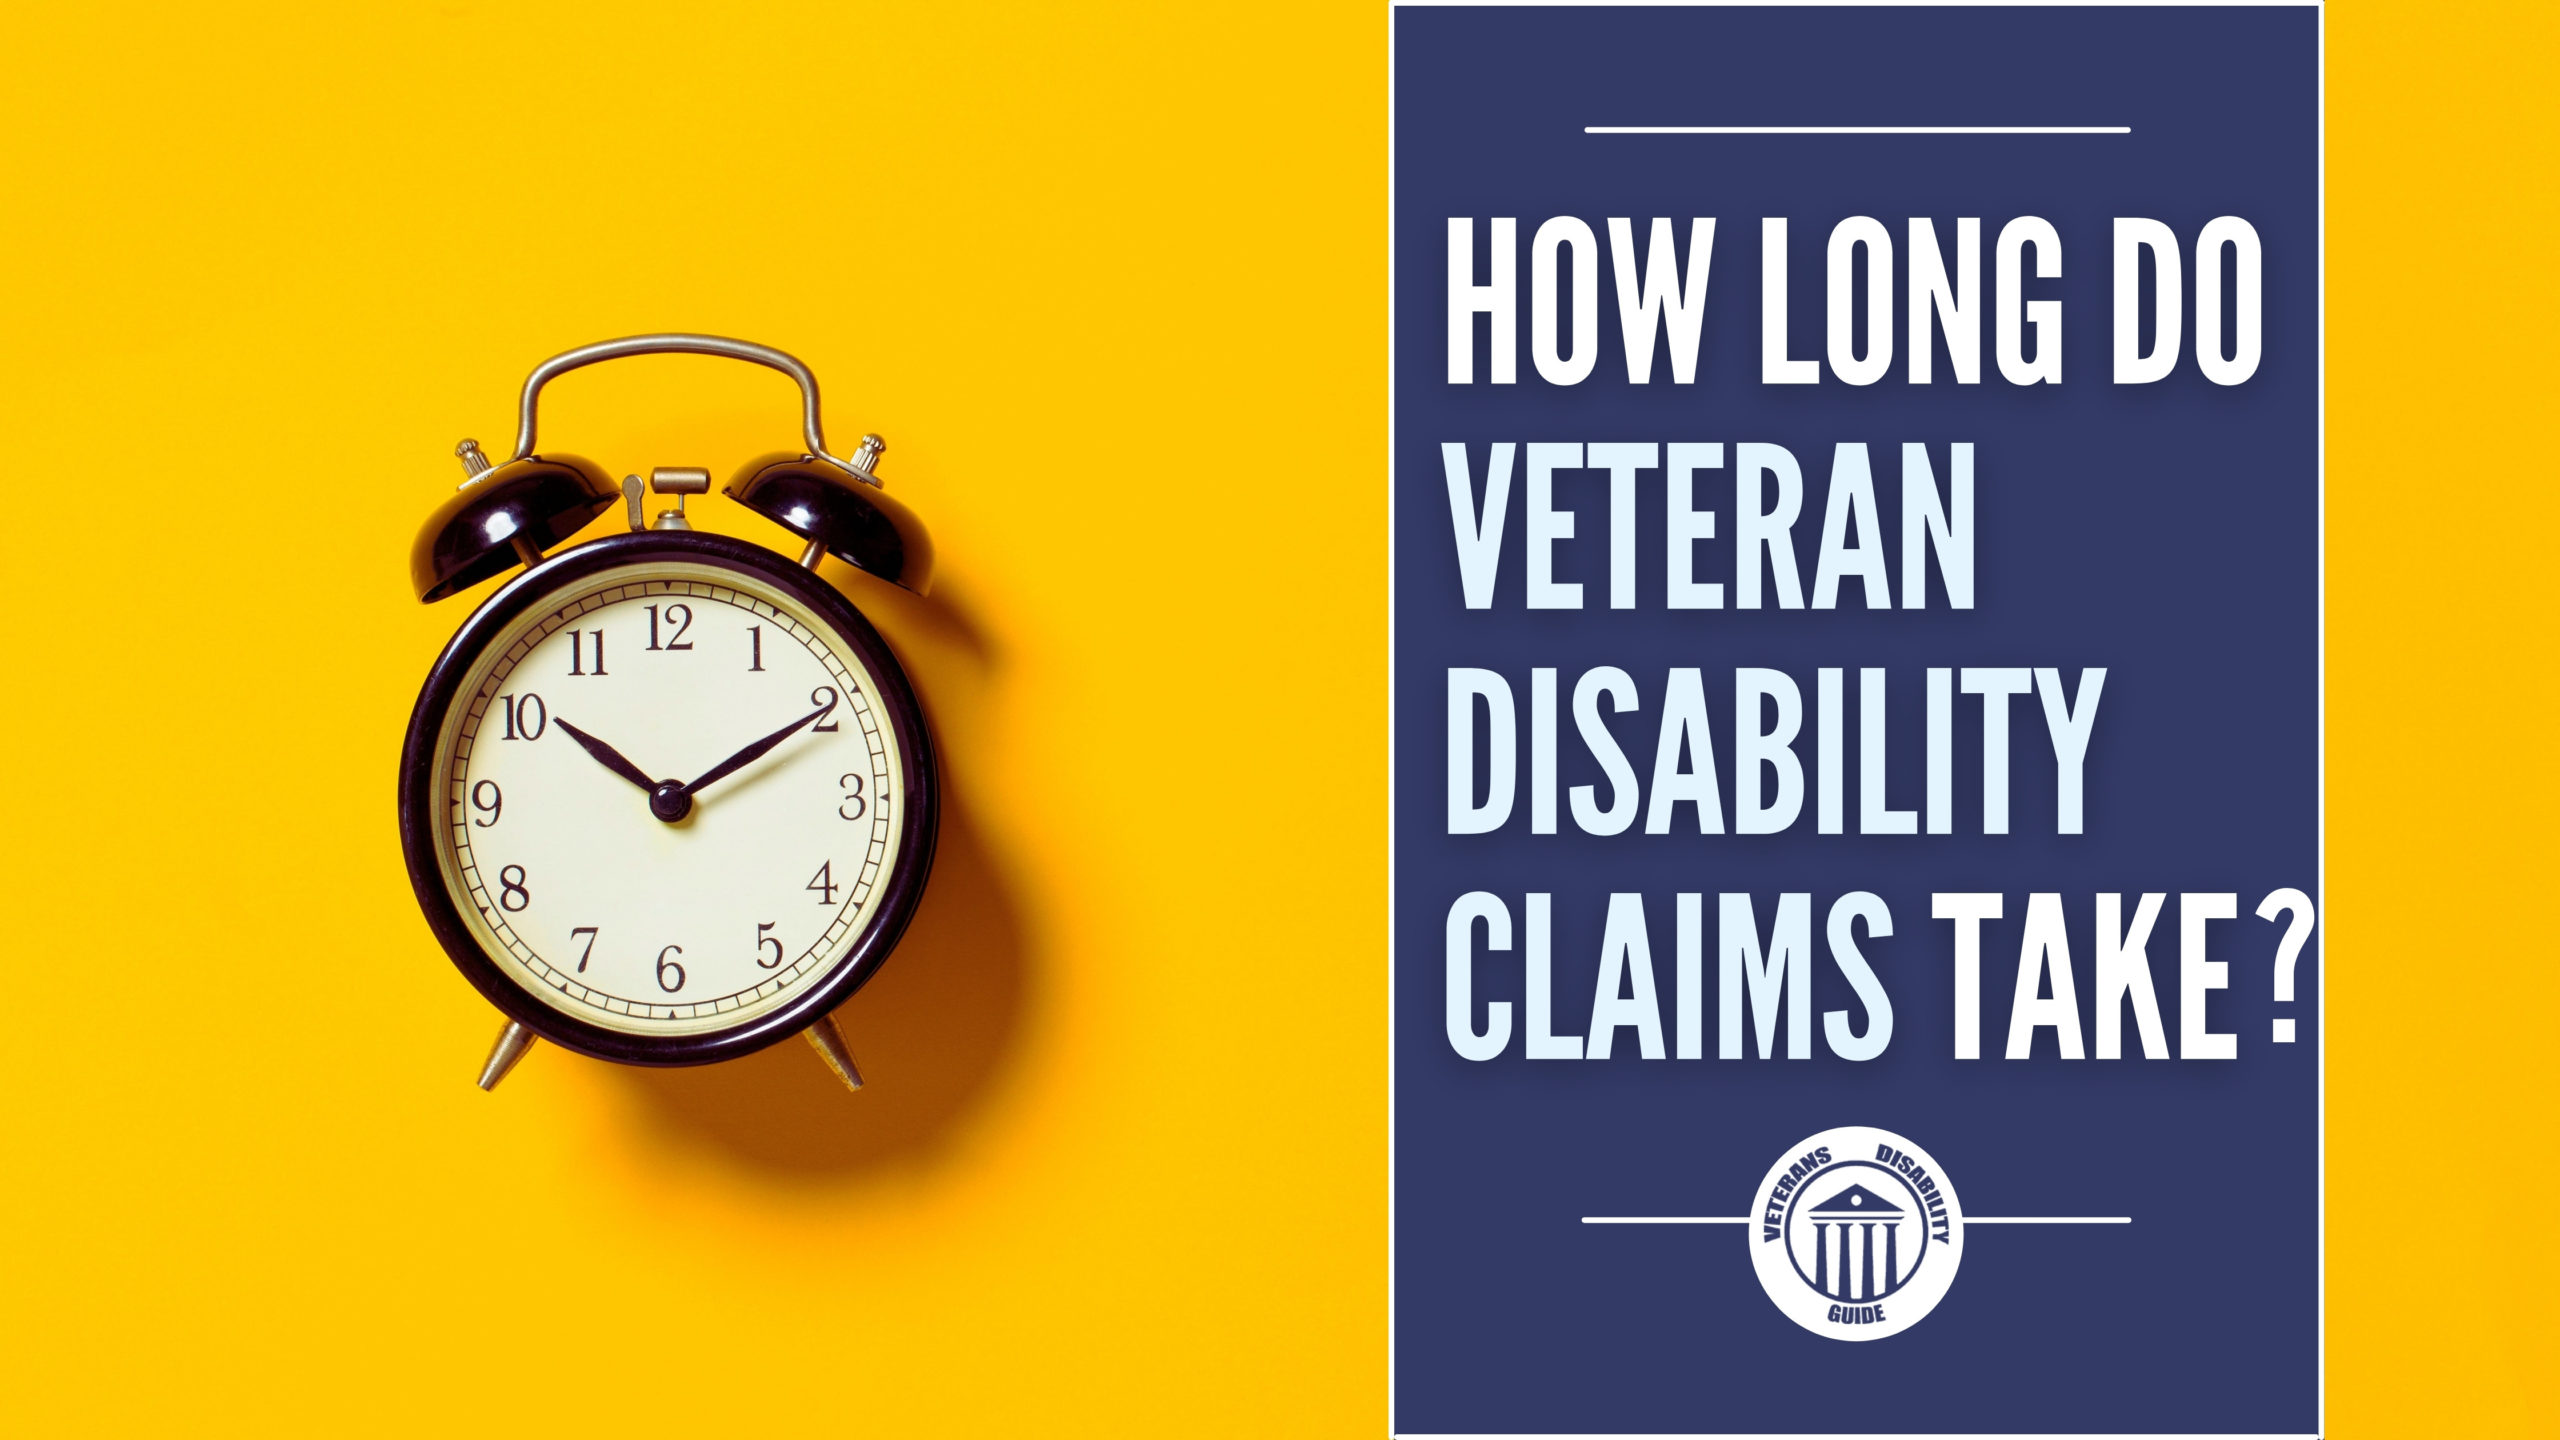 How Long Do Veteran Disability Claims Take blog header image